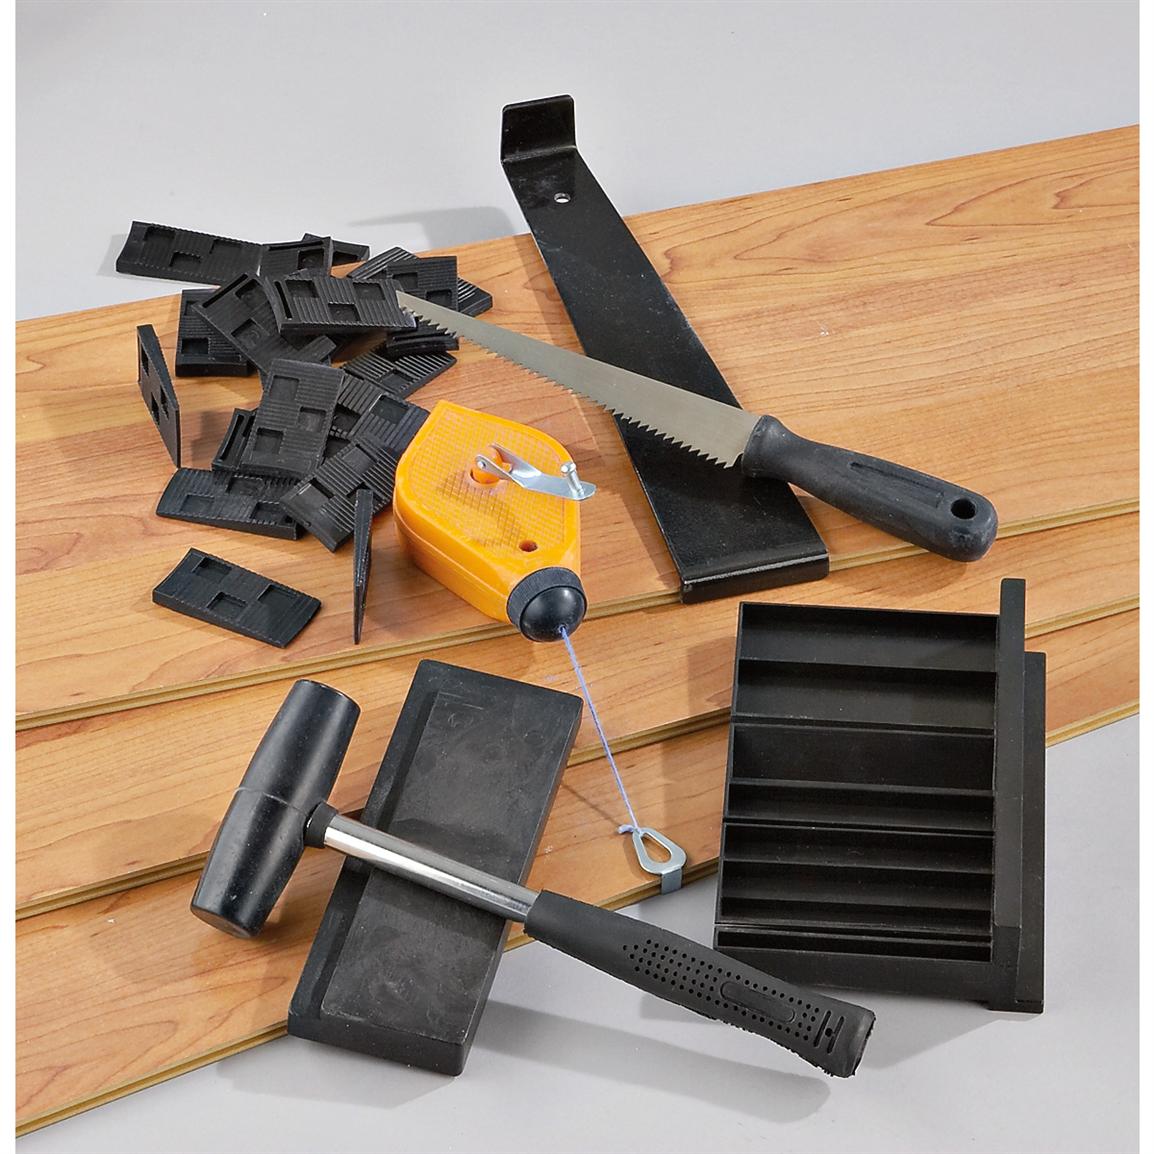 Hardwood / Laminate Flooring Installation Kit - 153384, Hand & Power Tools at Sportsman's Guide